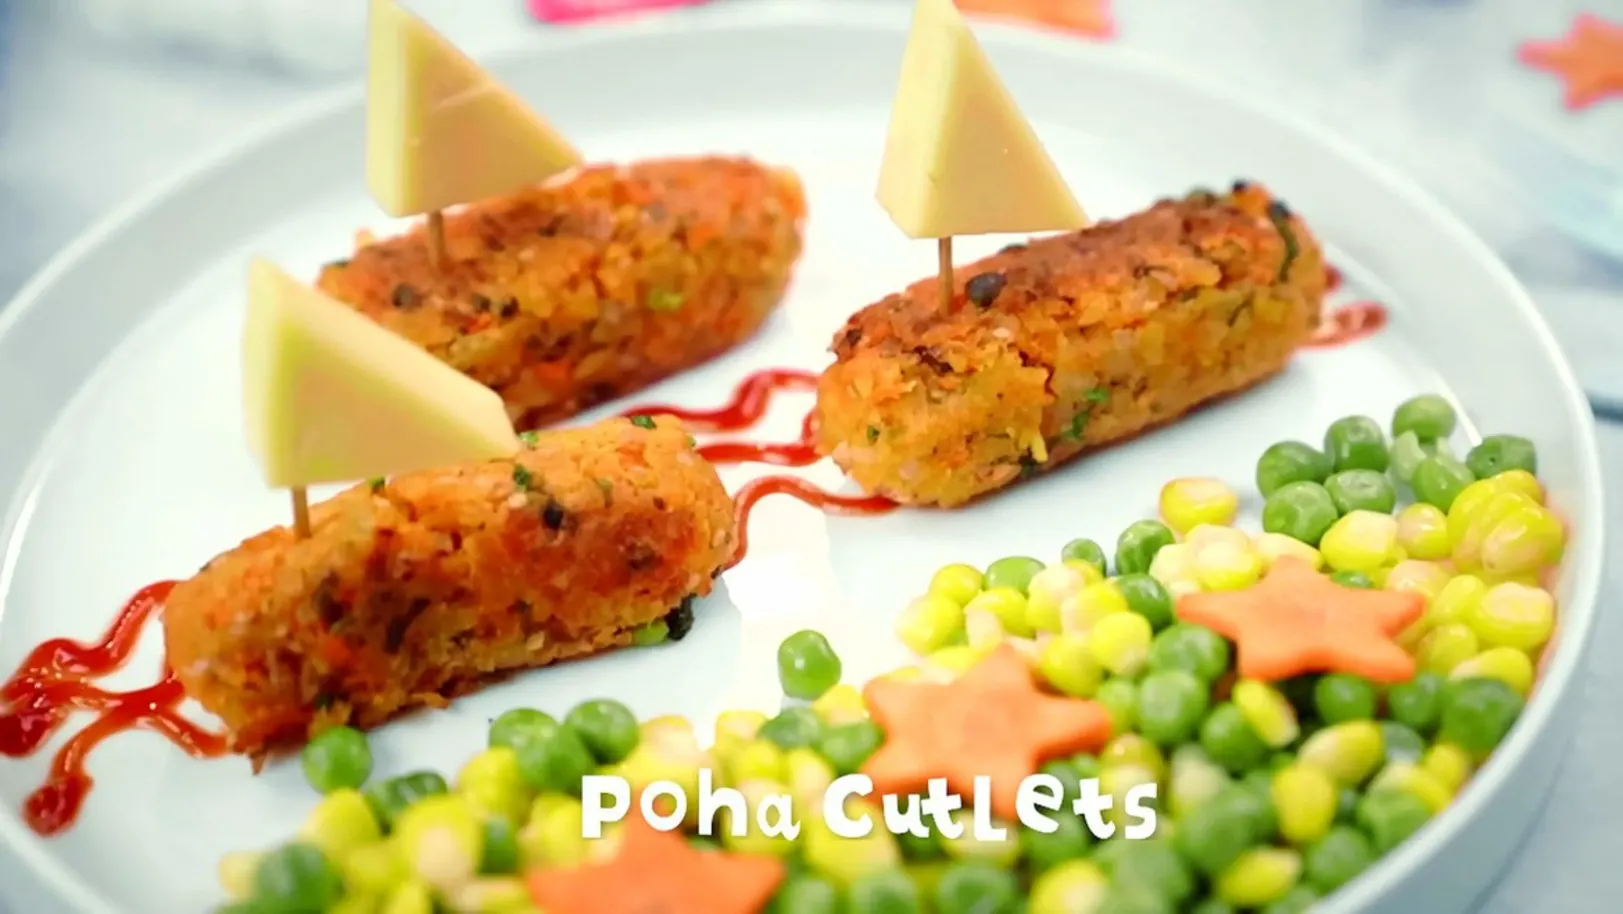 Special 'Poha Cutlets' for Kids | Junior Menu 